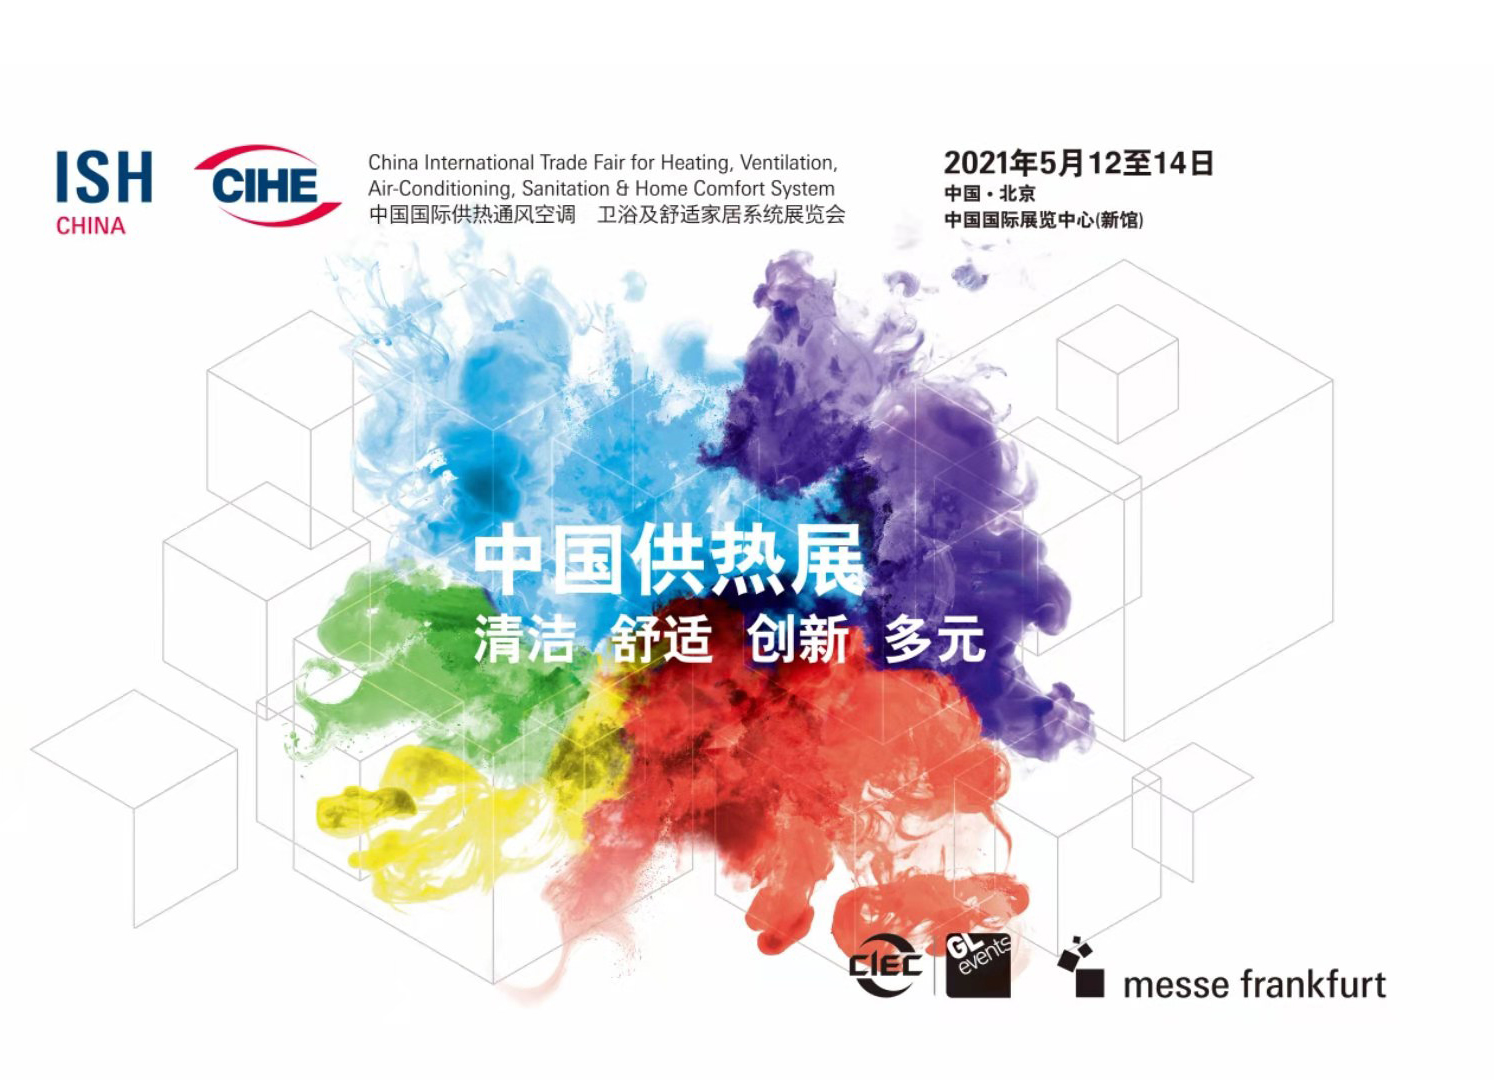 卓正科技，邀您參觀2021年ISH中國供熱展